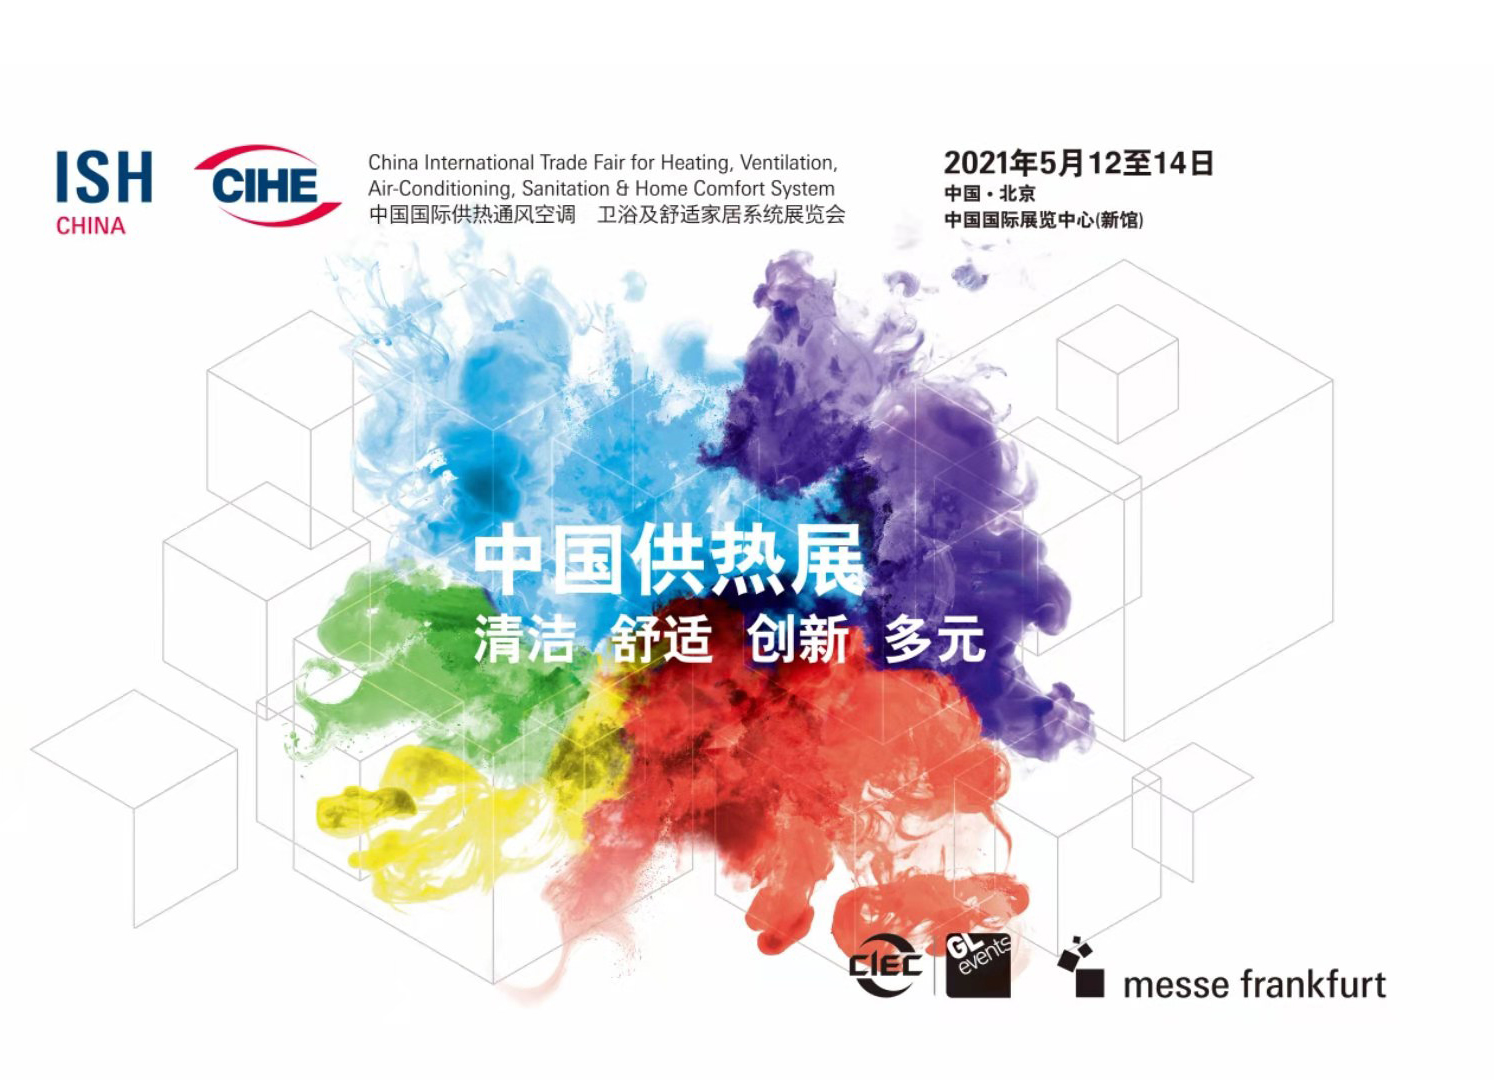 卓正科技，邀您參觀2021年ISH中國供熱展